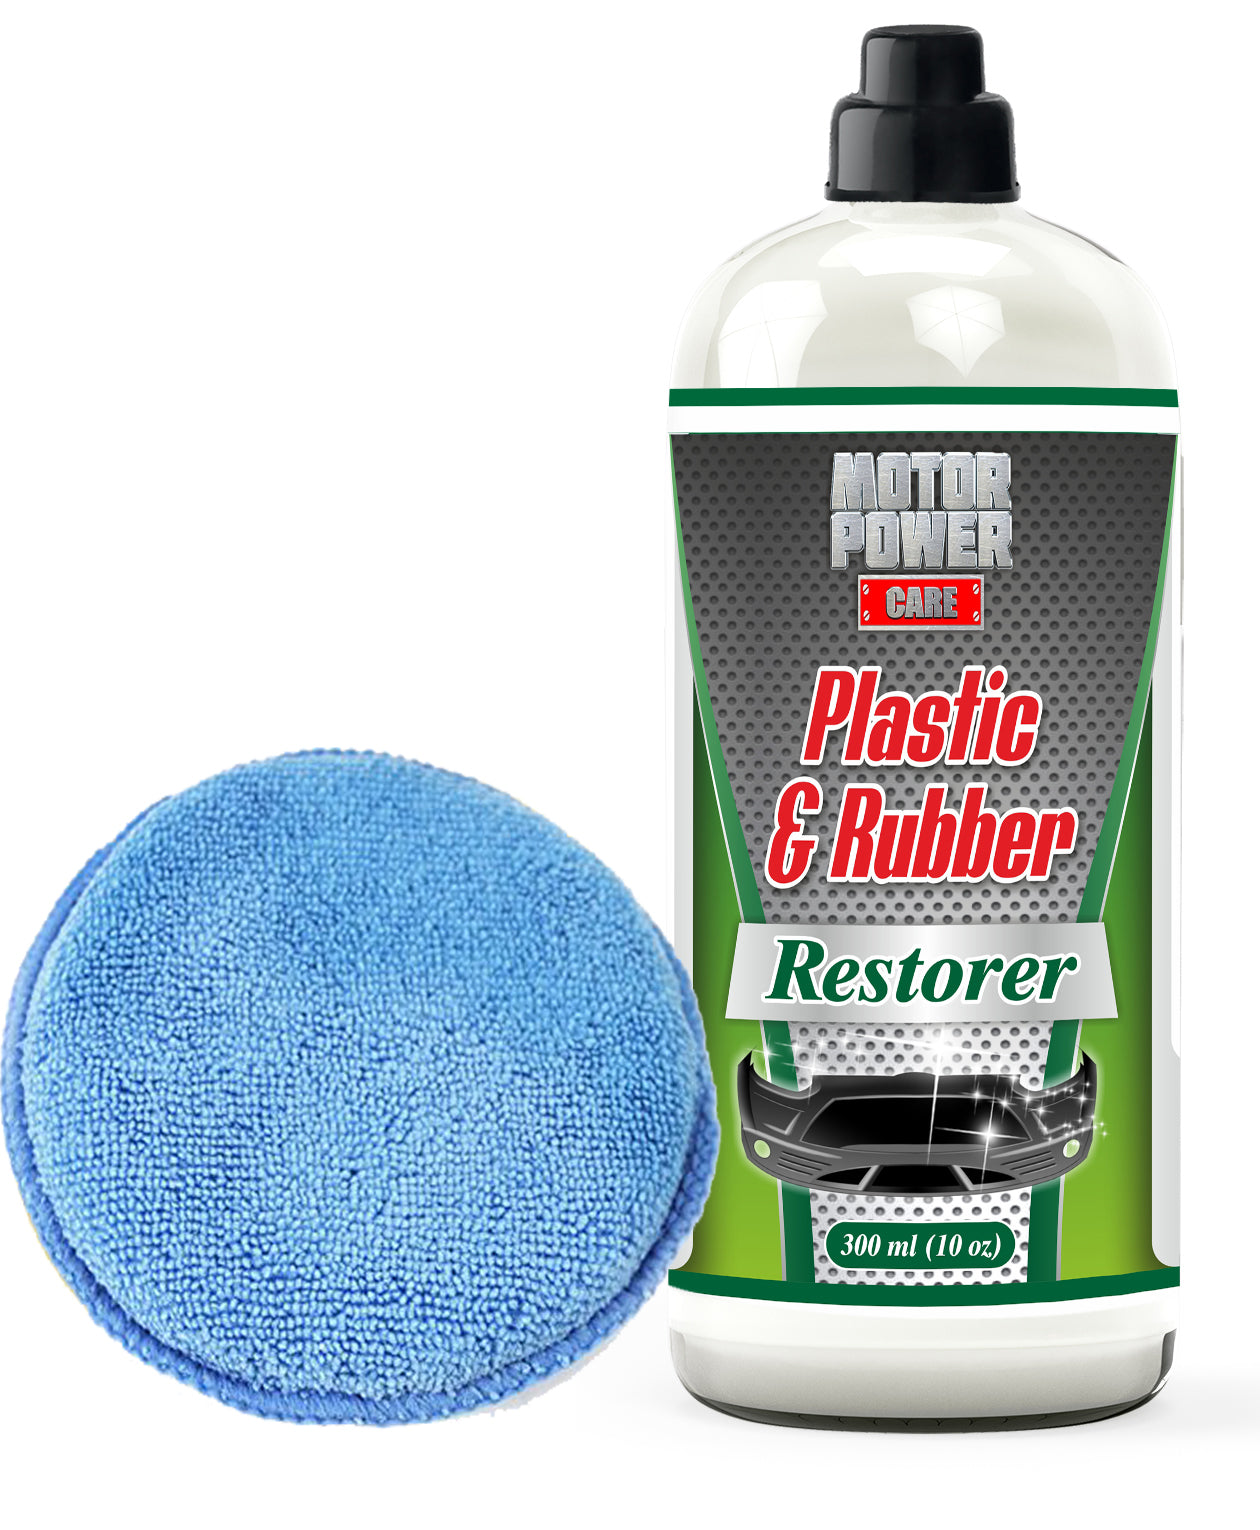 Restore Faded Plastic, Plastic Restorer